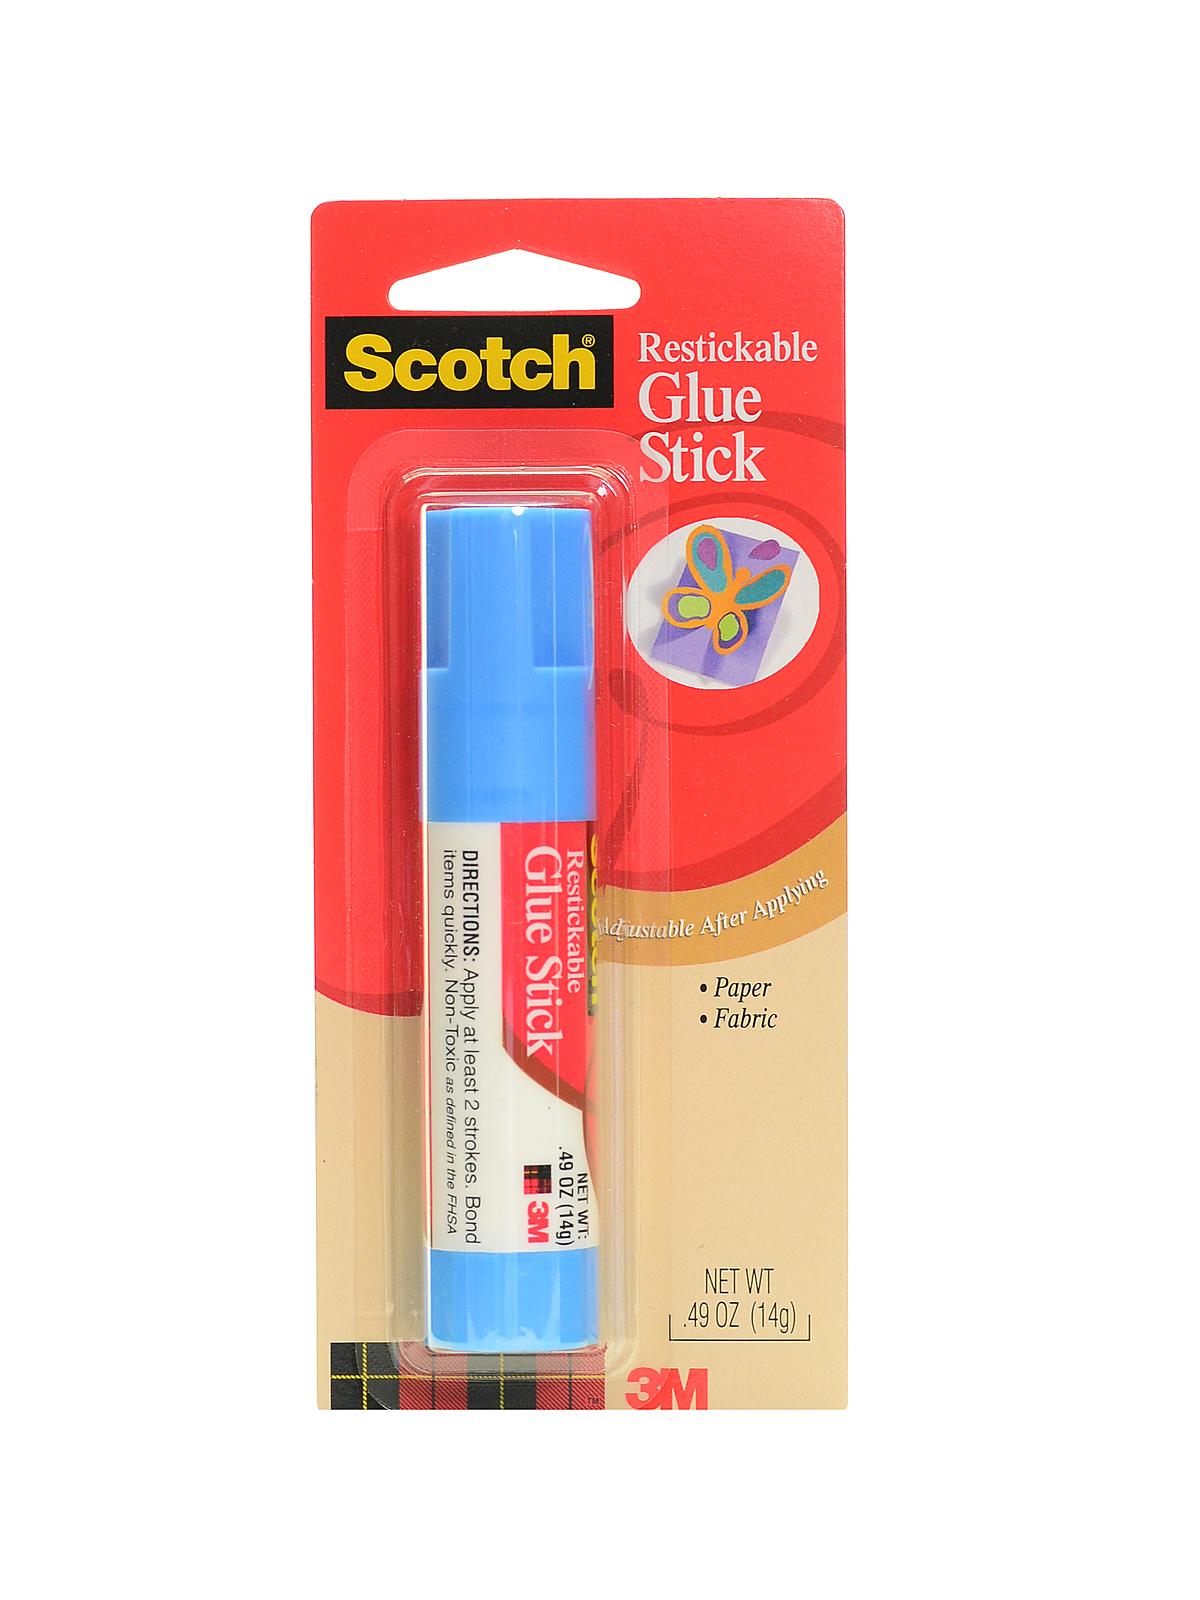 Scotch Glue Stick Restickable Adhesive 0.40 Oz. 6314